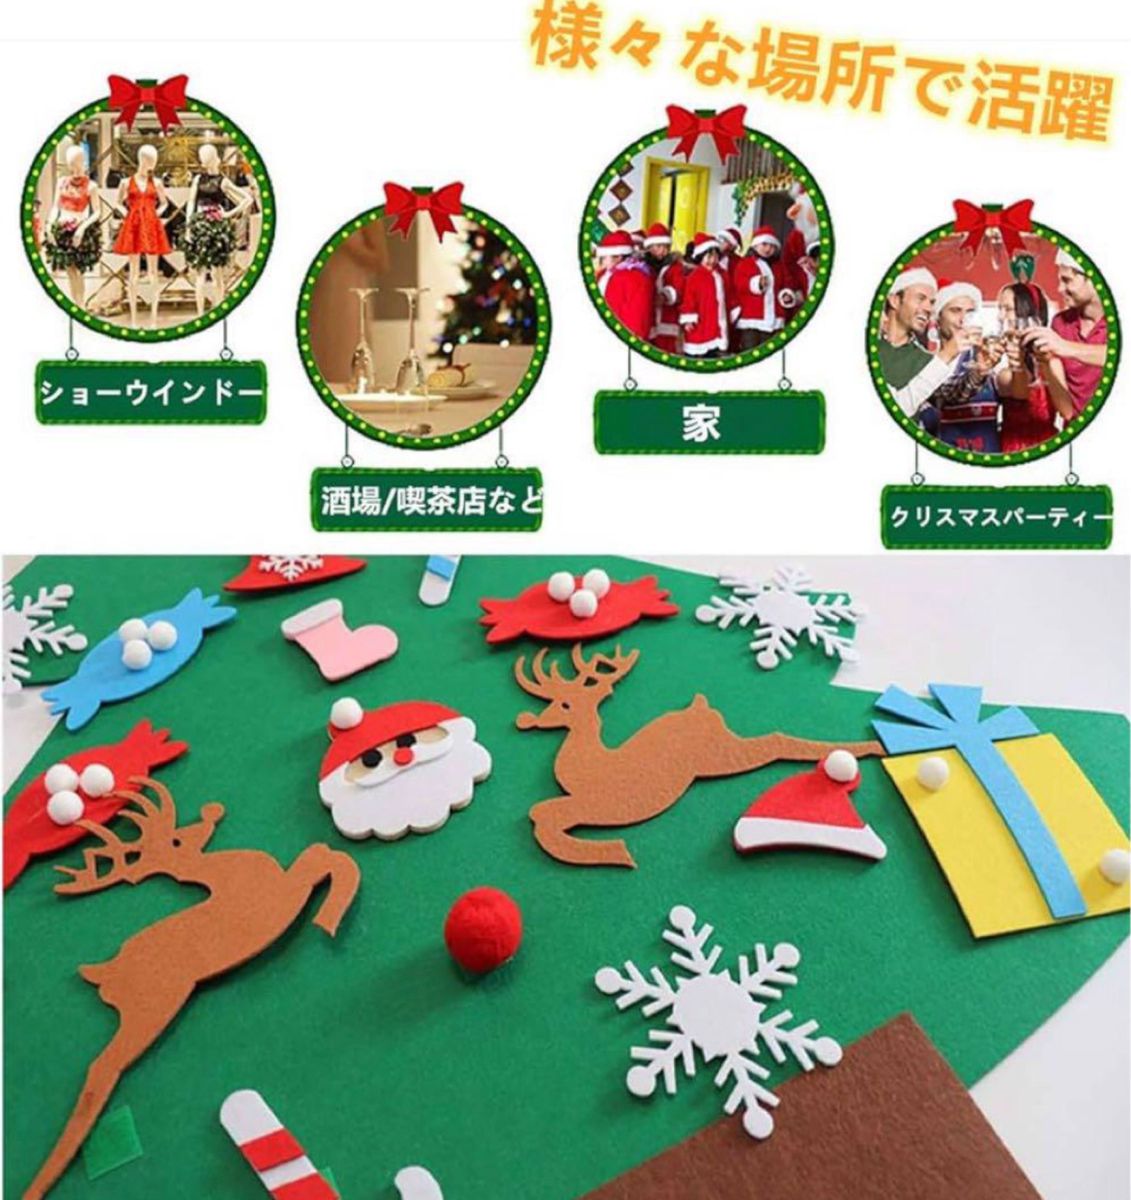 Kuroobaa クリスマス 飾り 壁掛け フェルトクリスマスツリー オーナメント クリスマスデコレーション クリスマス飾り